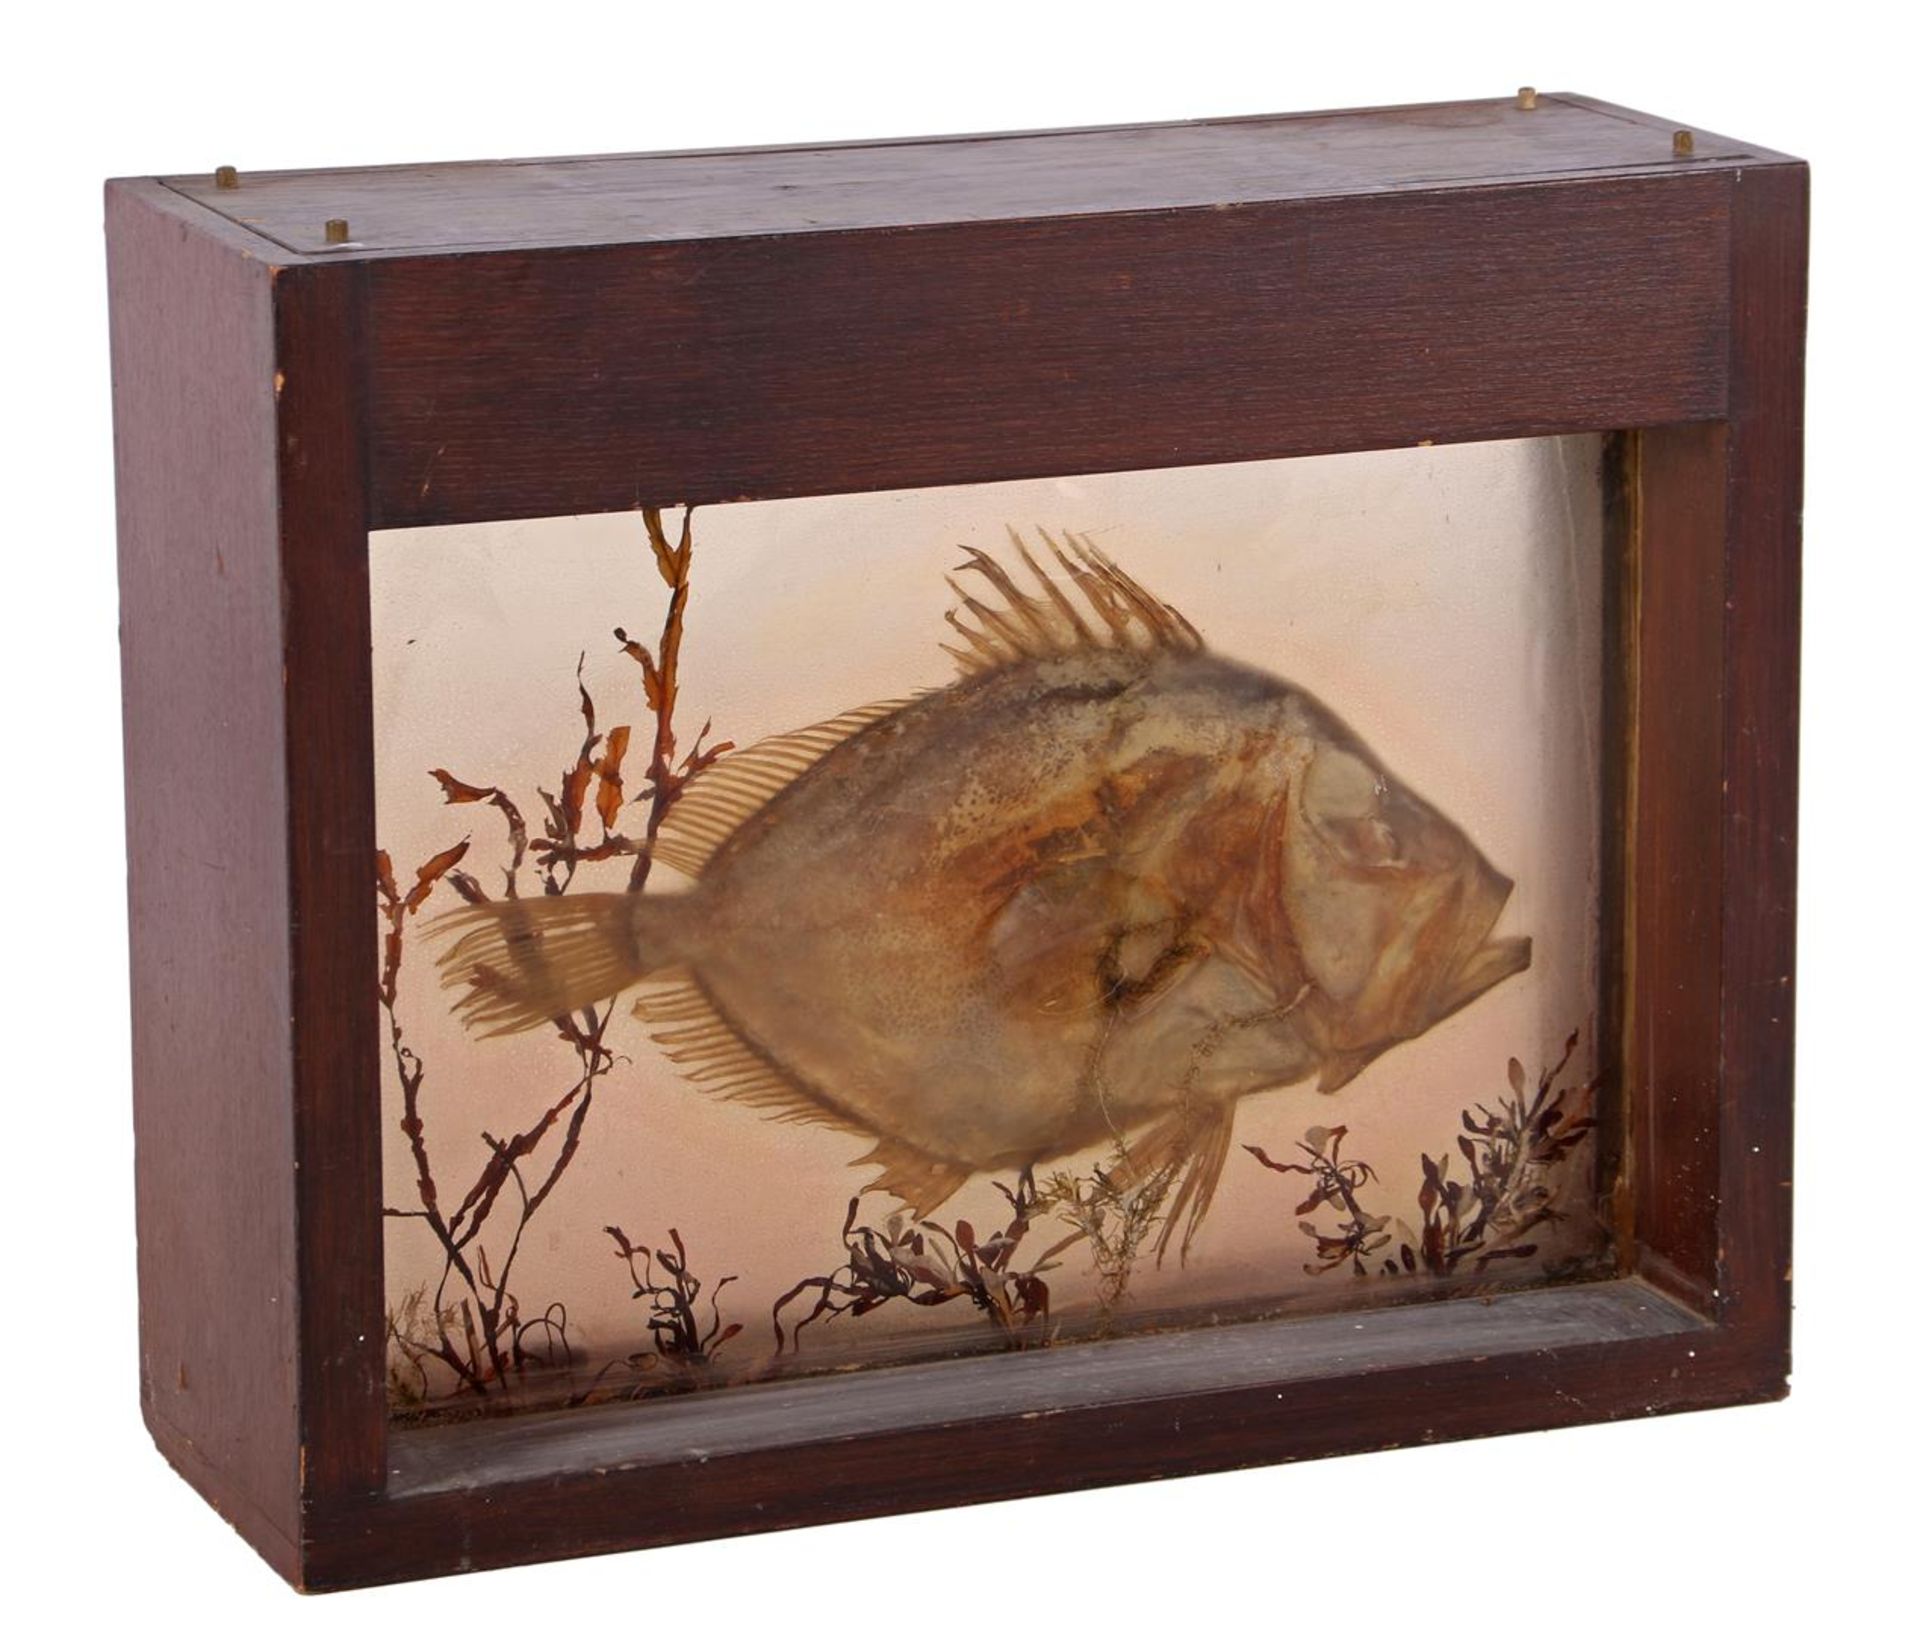 Showcase with a prepared sunfish